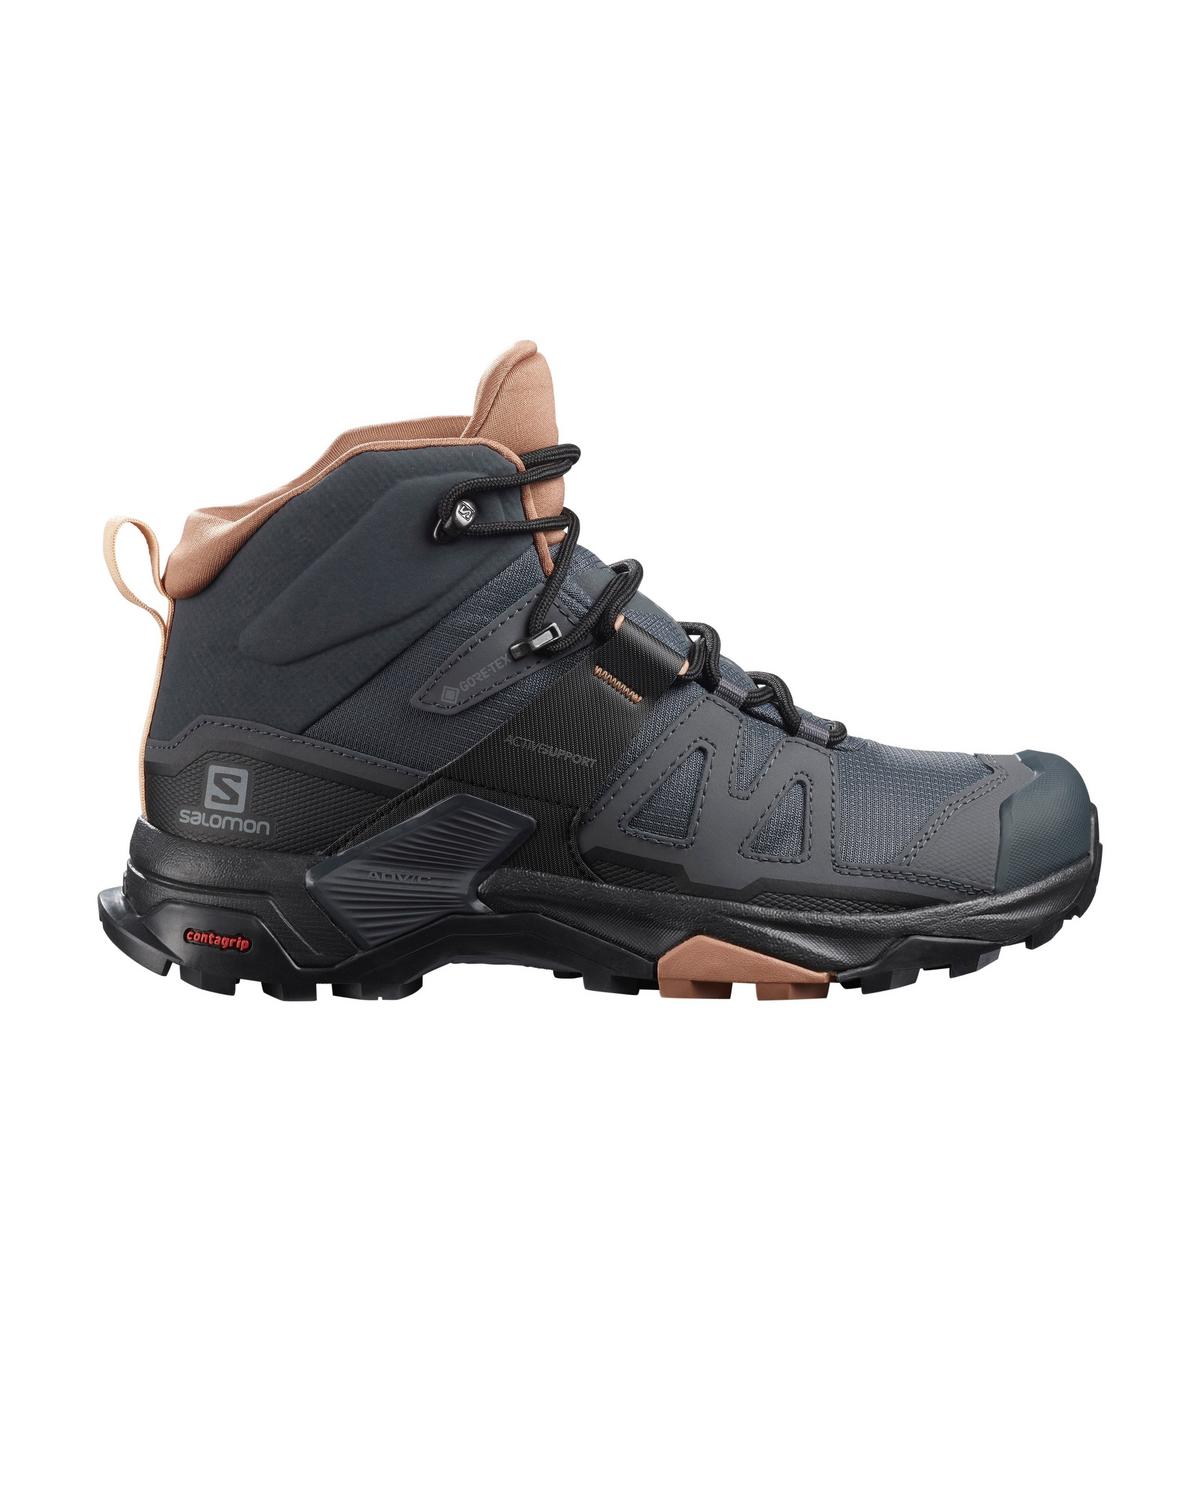 Salomon Women’s X-Ultra 4 Gore-Tex Hiking Boots -  Charcoal